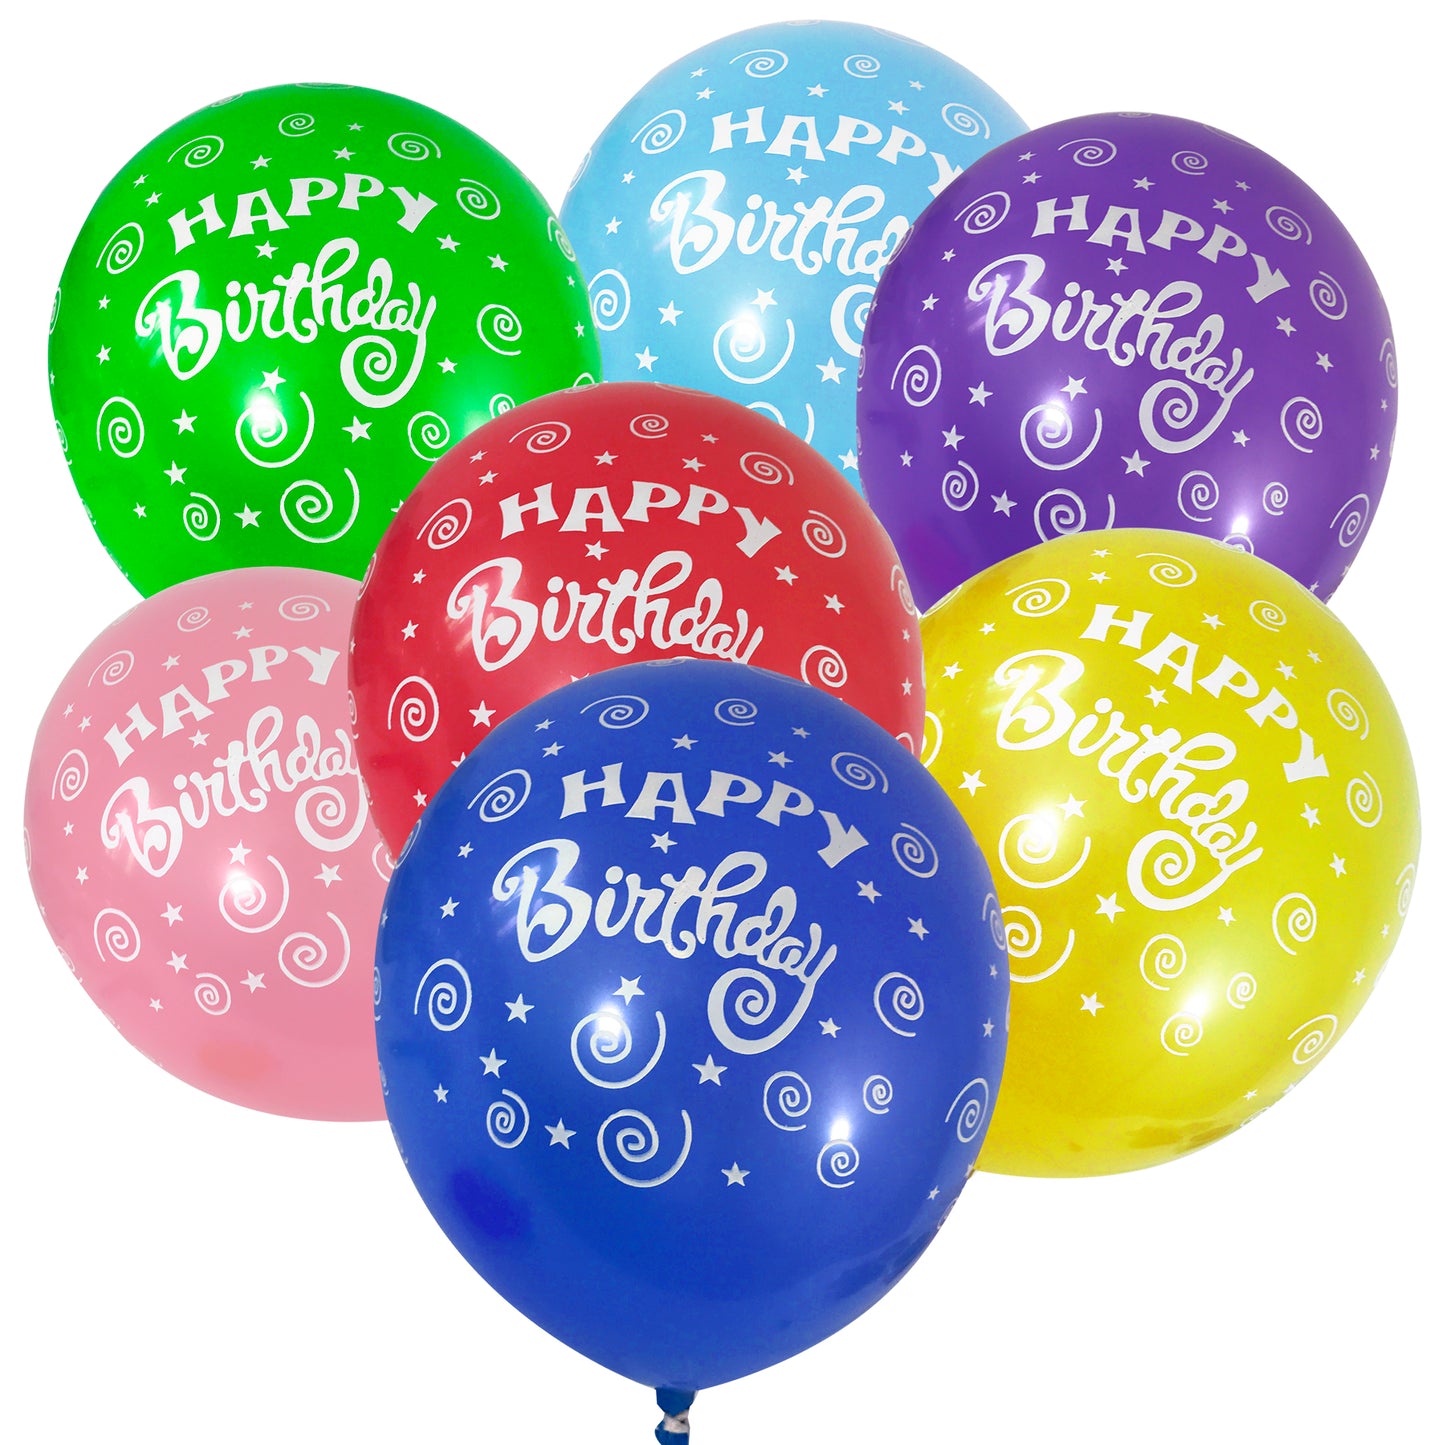 Allgala Balloons "Happy Birthday" 12" 100 Count Helium Grade Premium Printed Latex Balloons